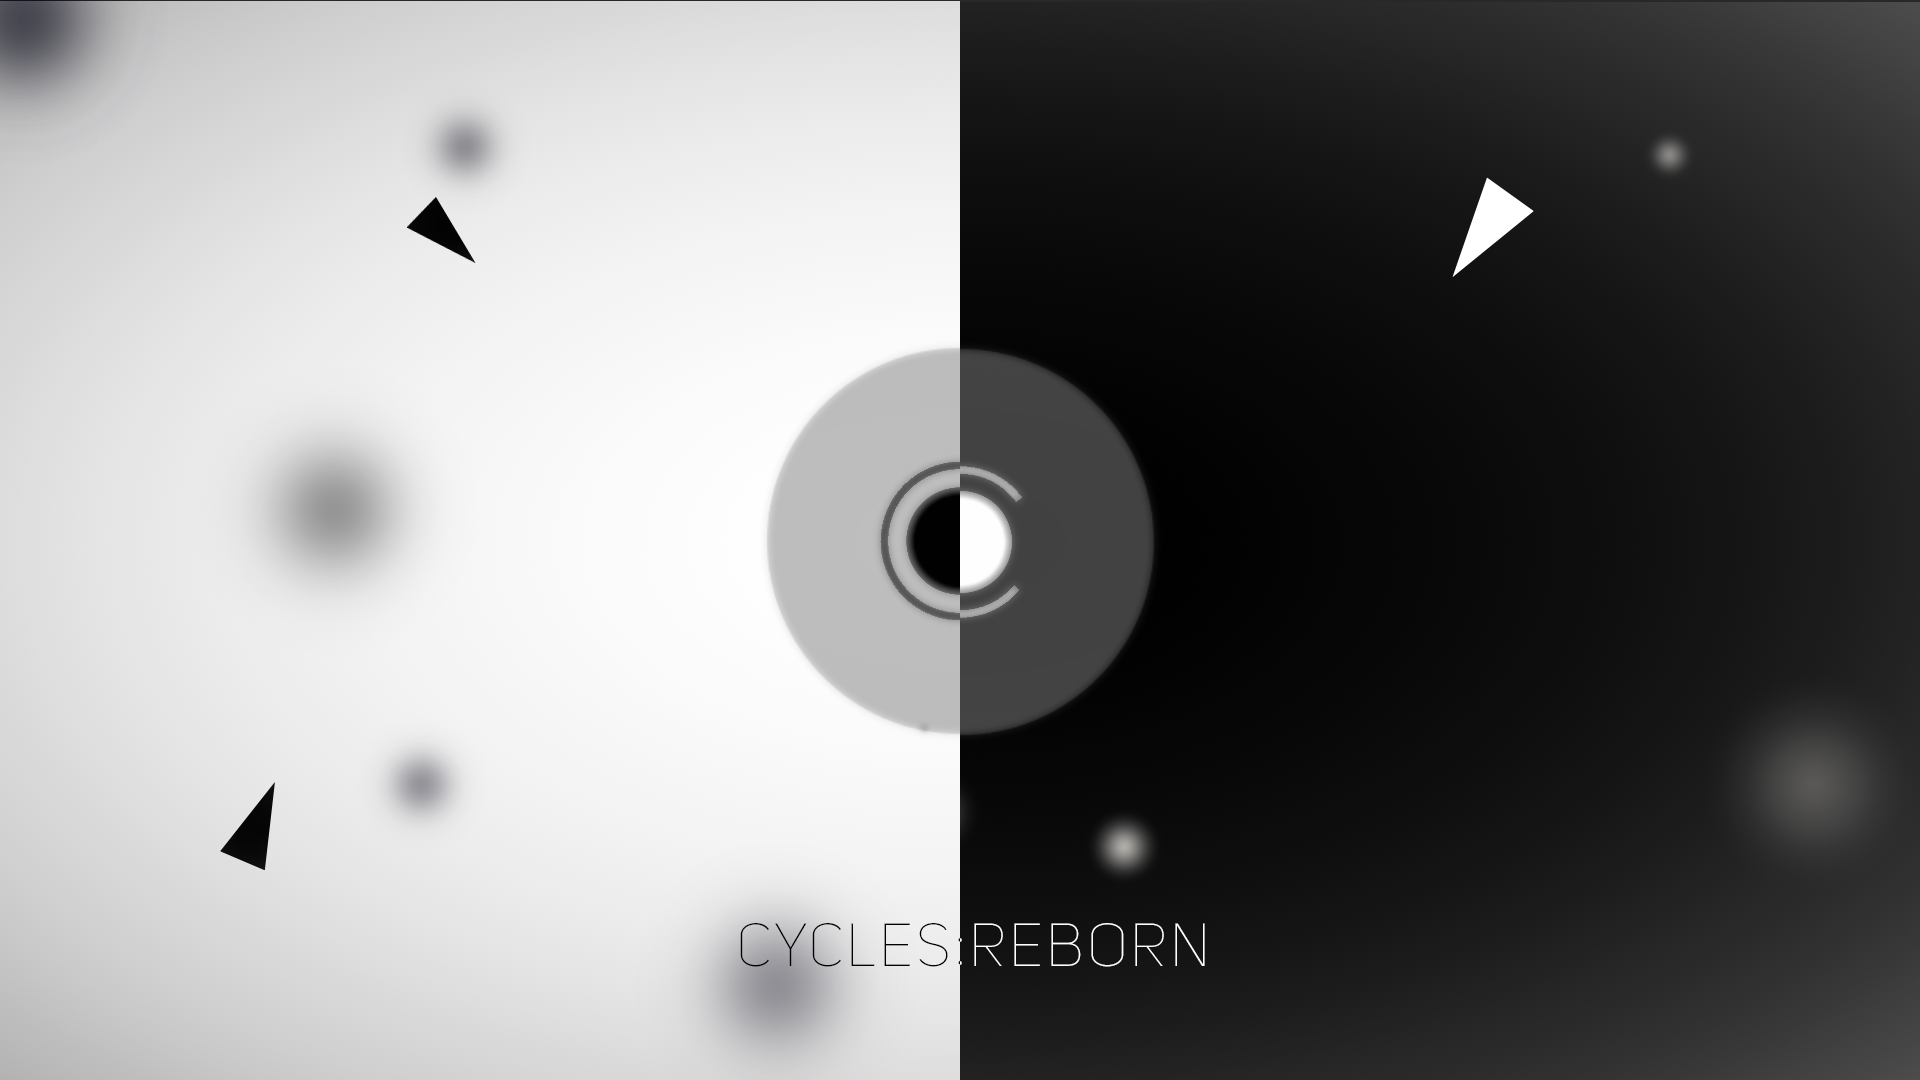 CYCLES:REBORN